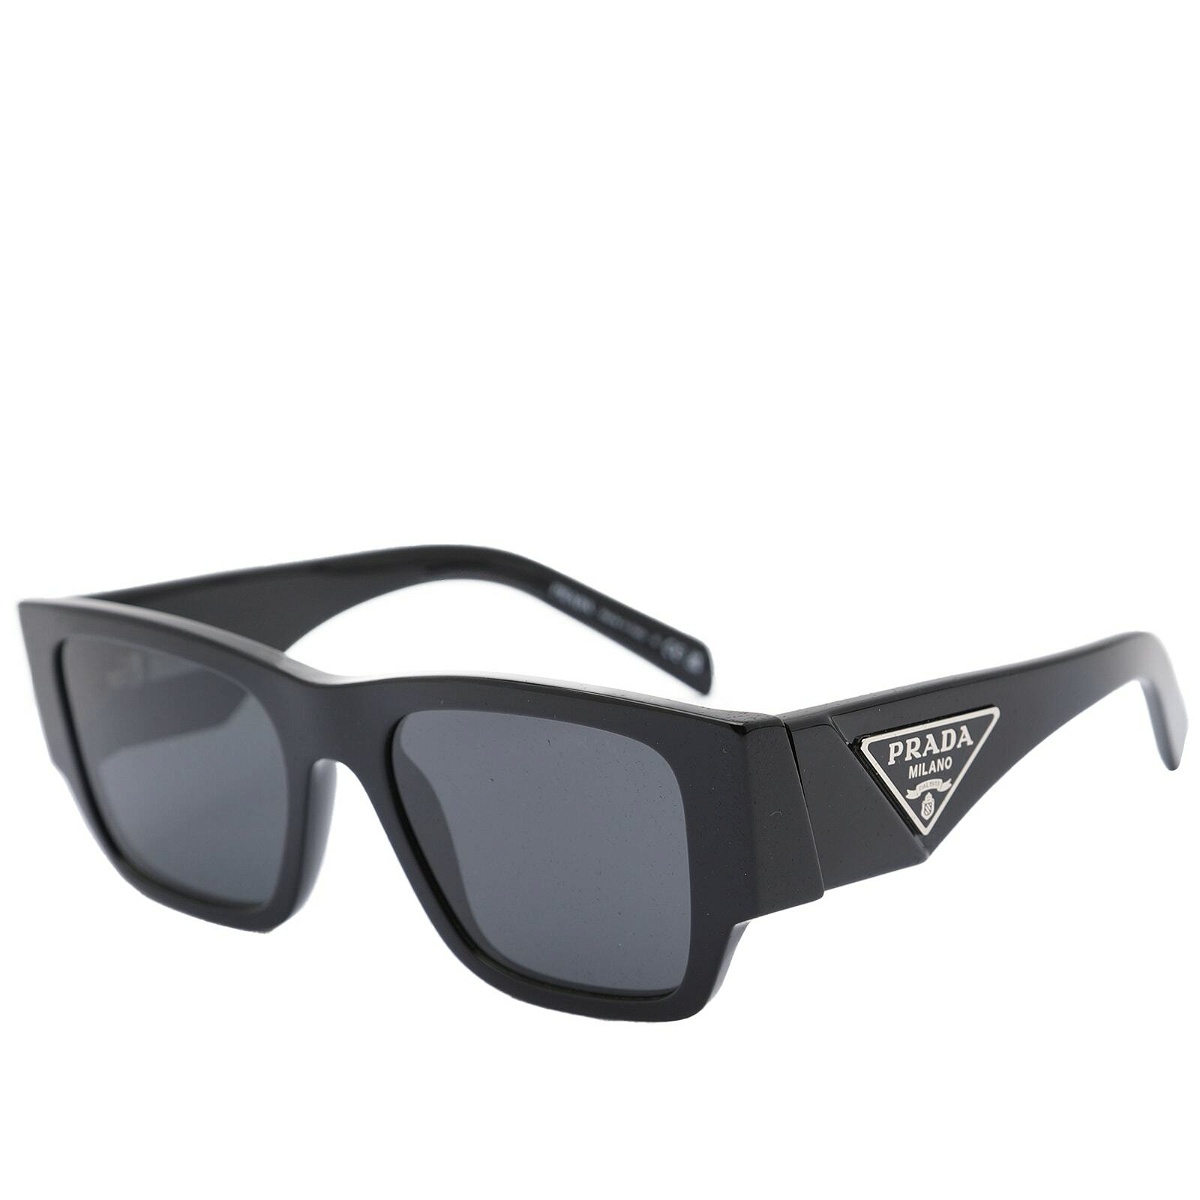 Prada Eyewear Men's PR 27ZS Sunglasses in Black/Yellow Prada